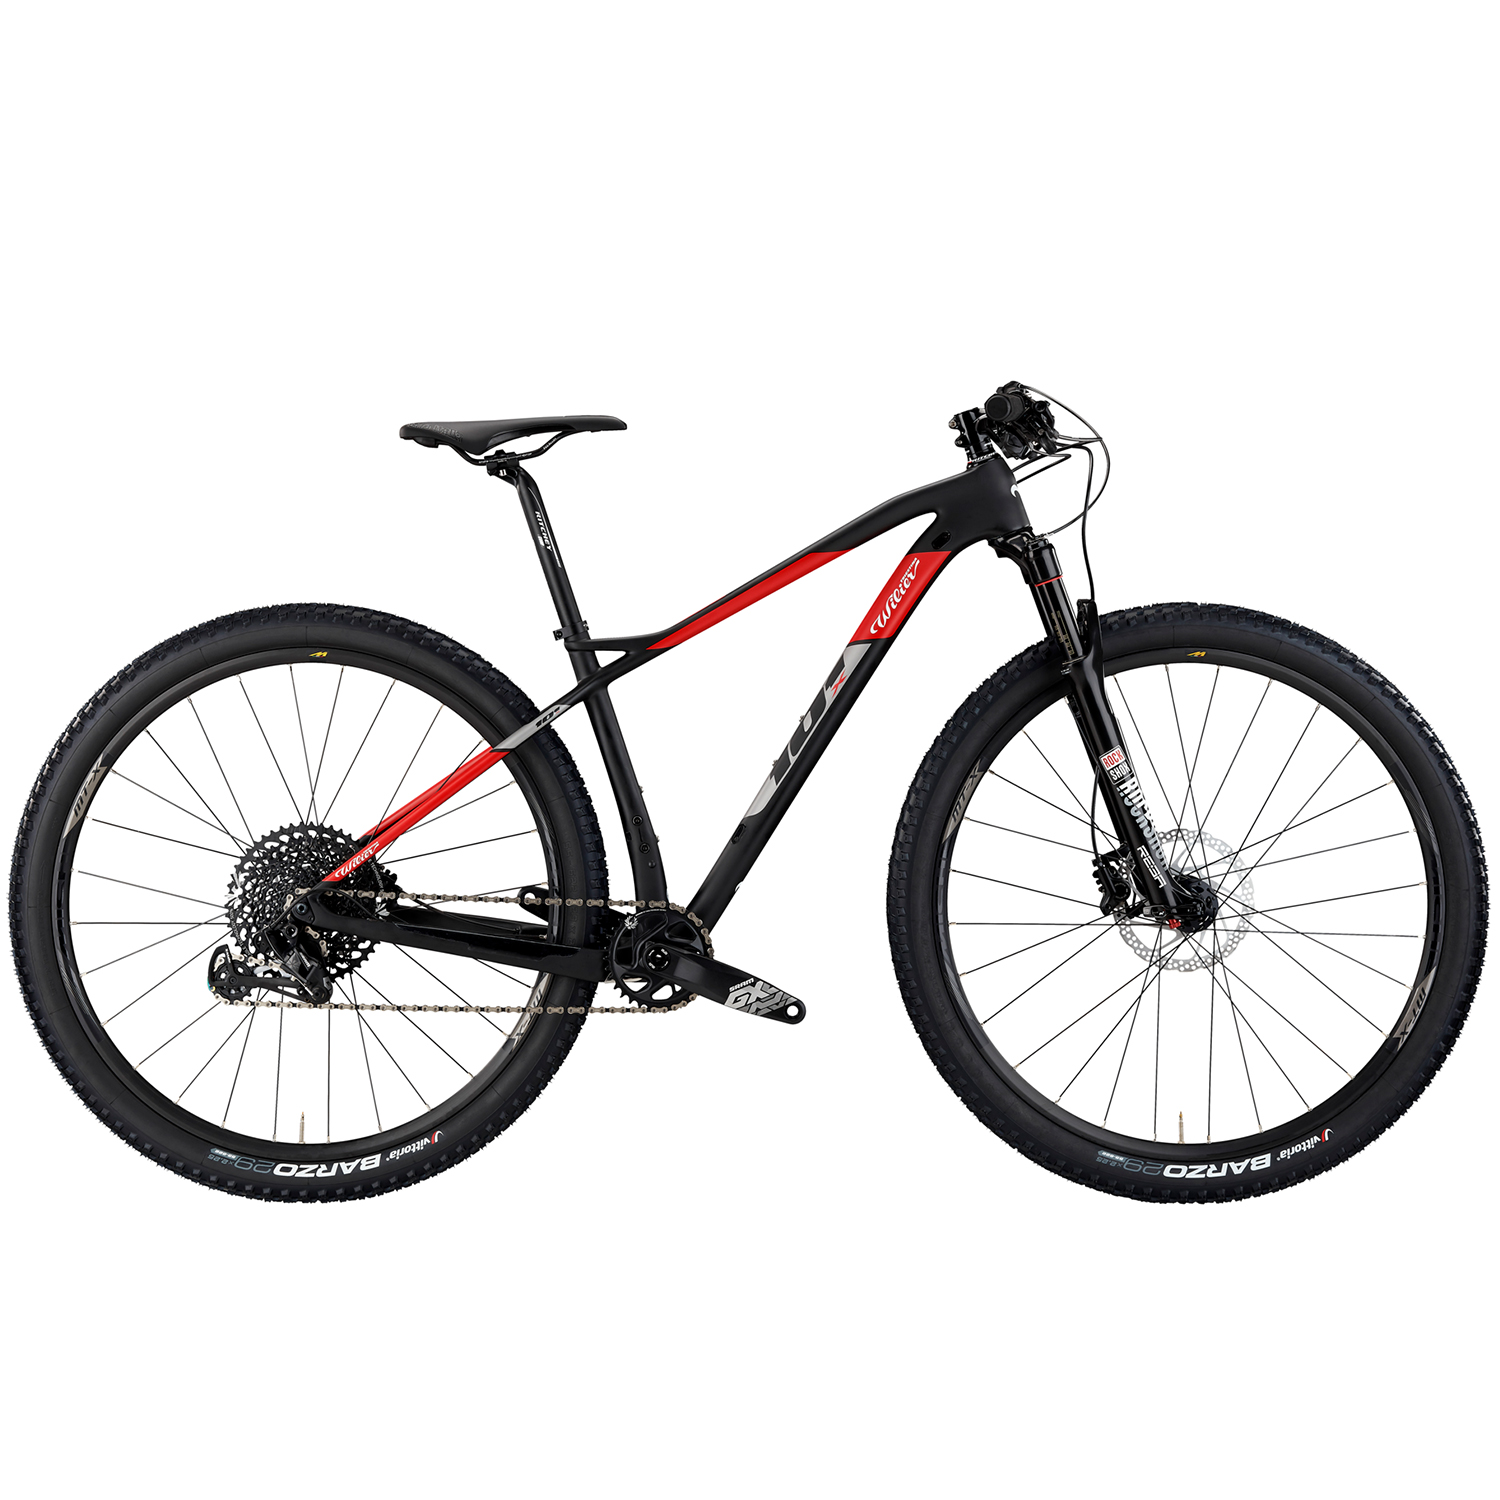 wilier 110x xt carbon mountain bike